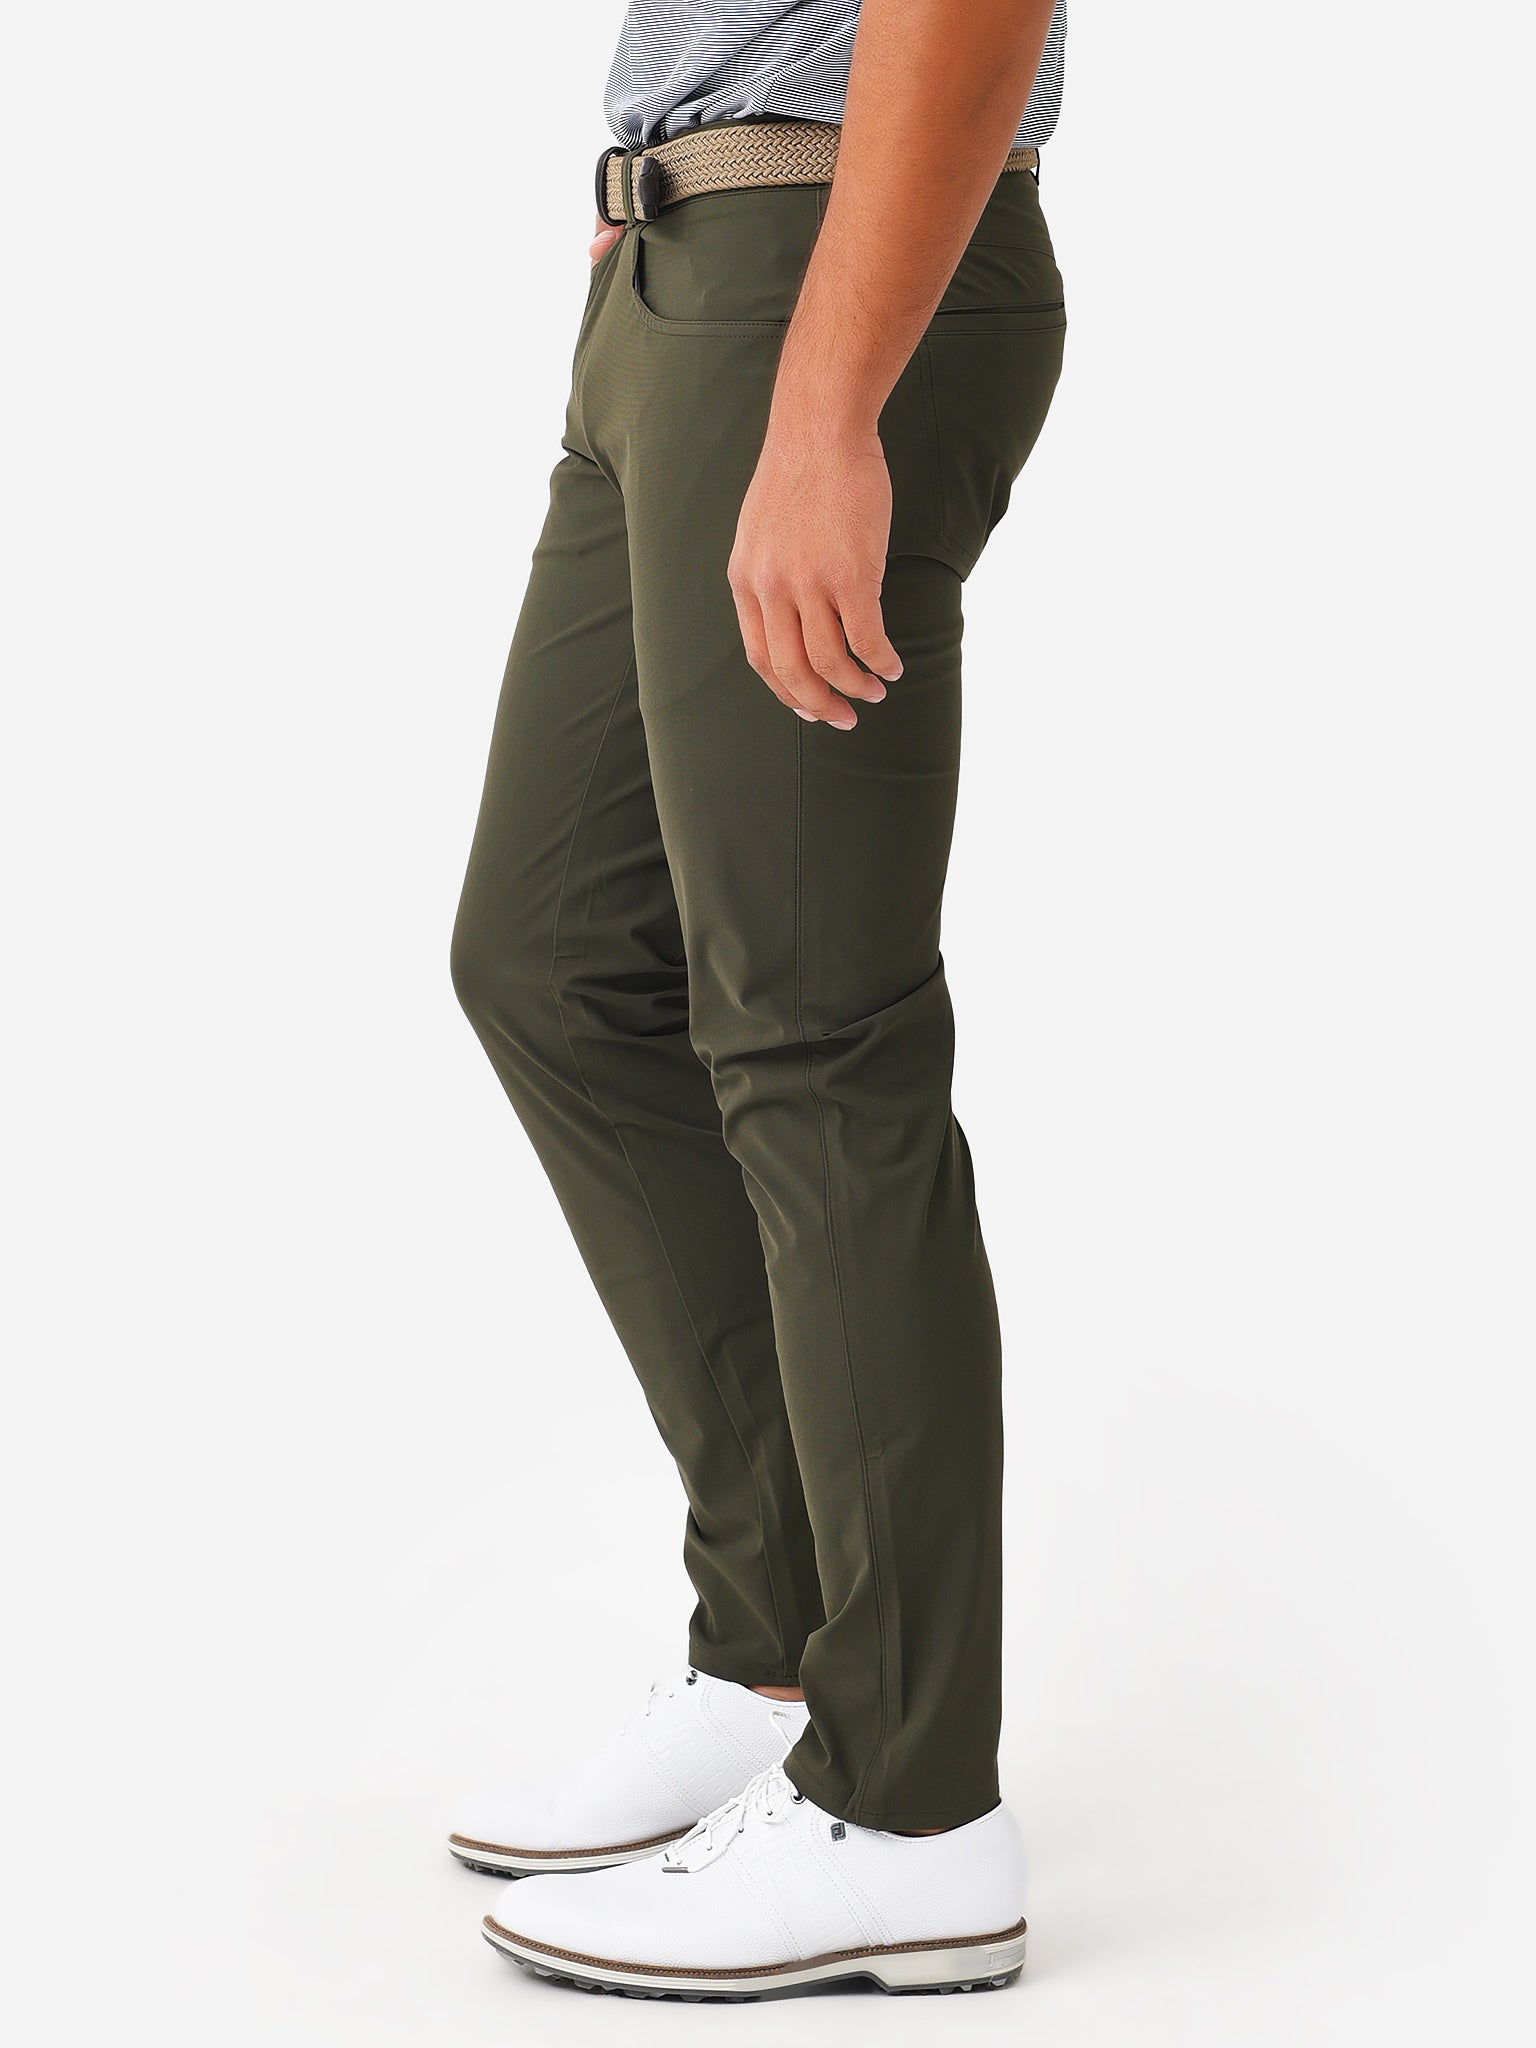 Peter Millar Mens 100% Pima Cotton Washed Golf Pants Size 38x30